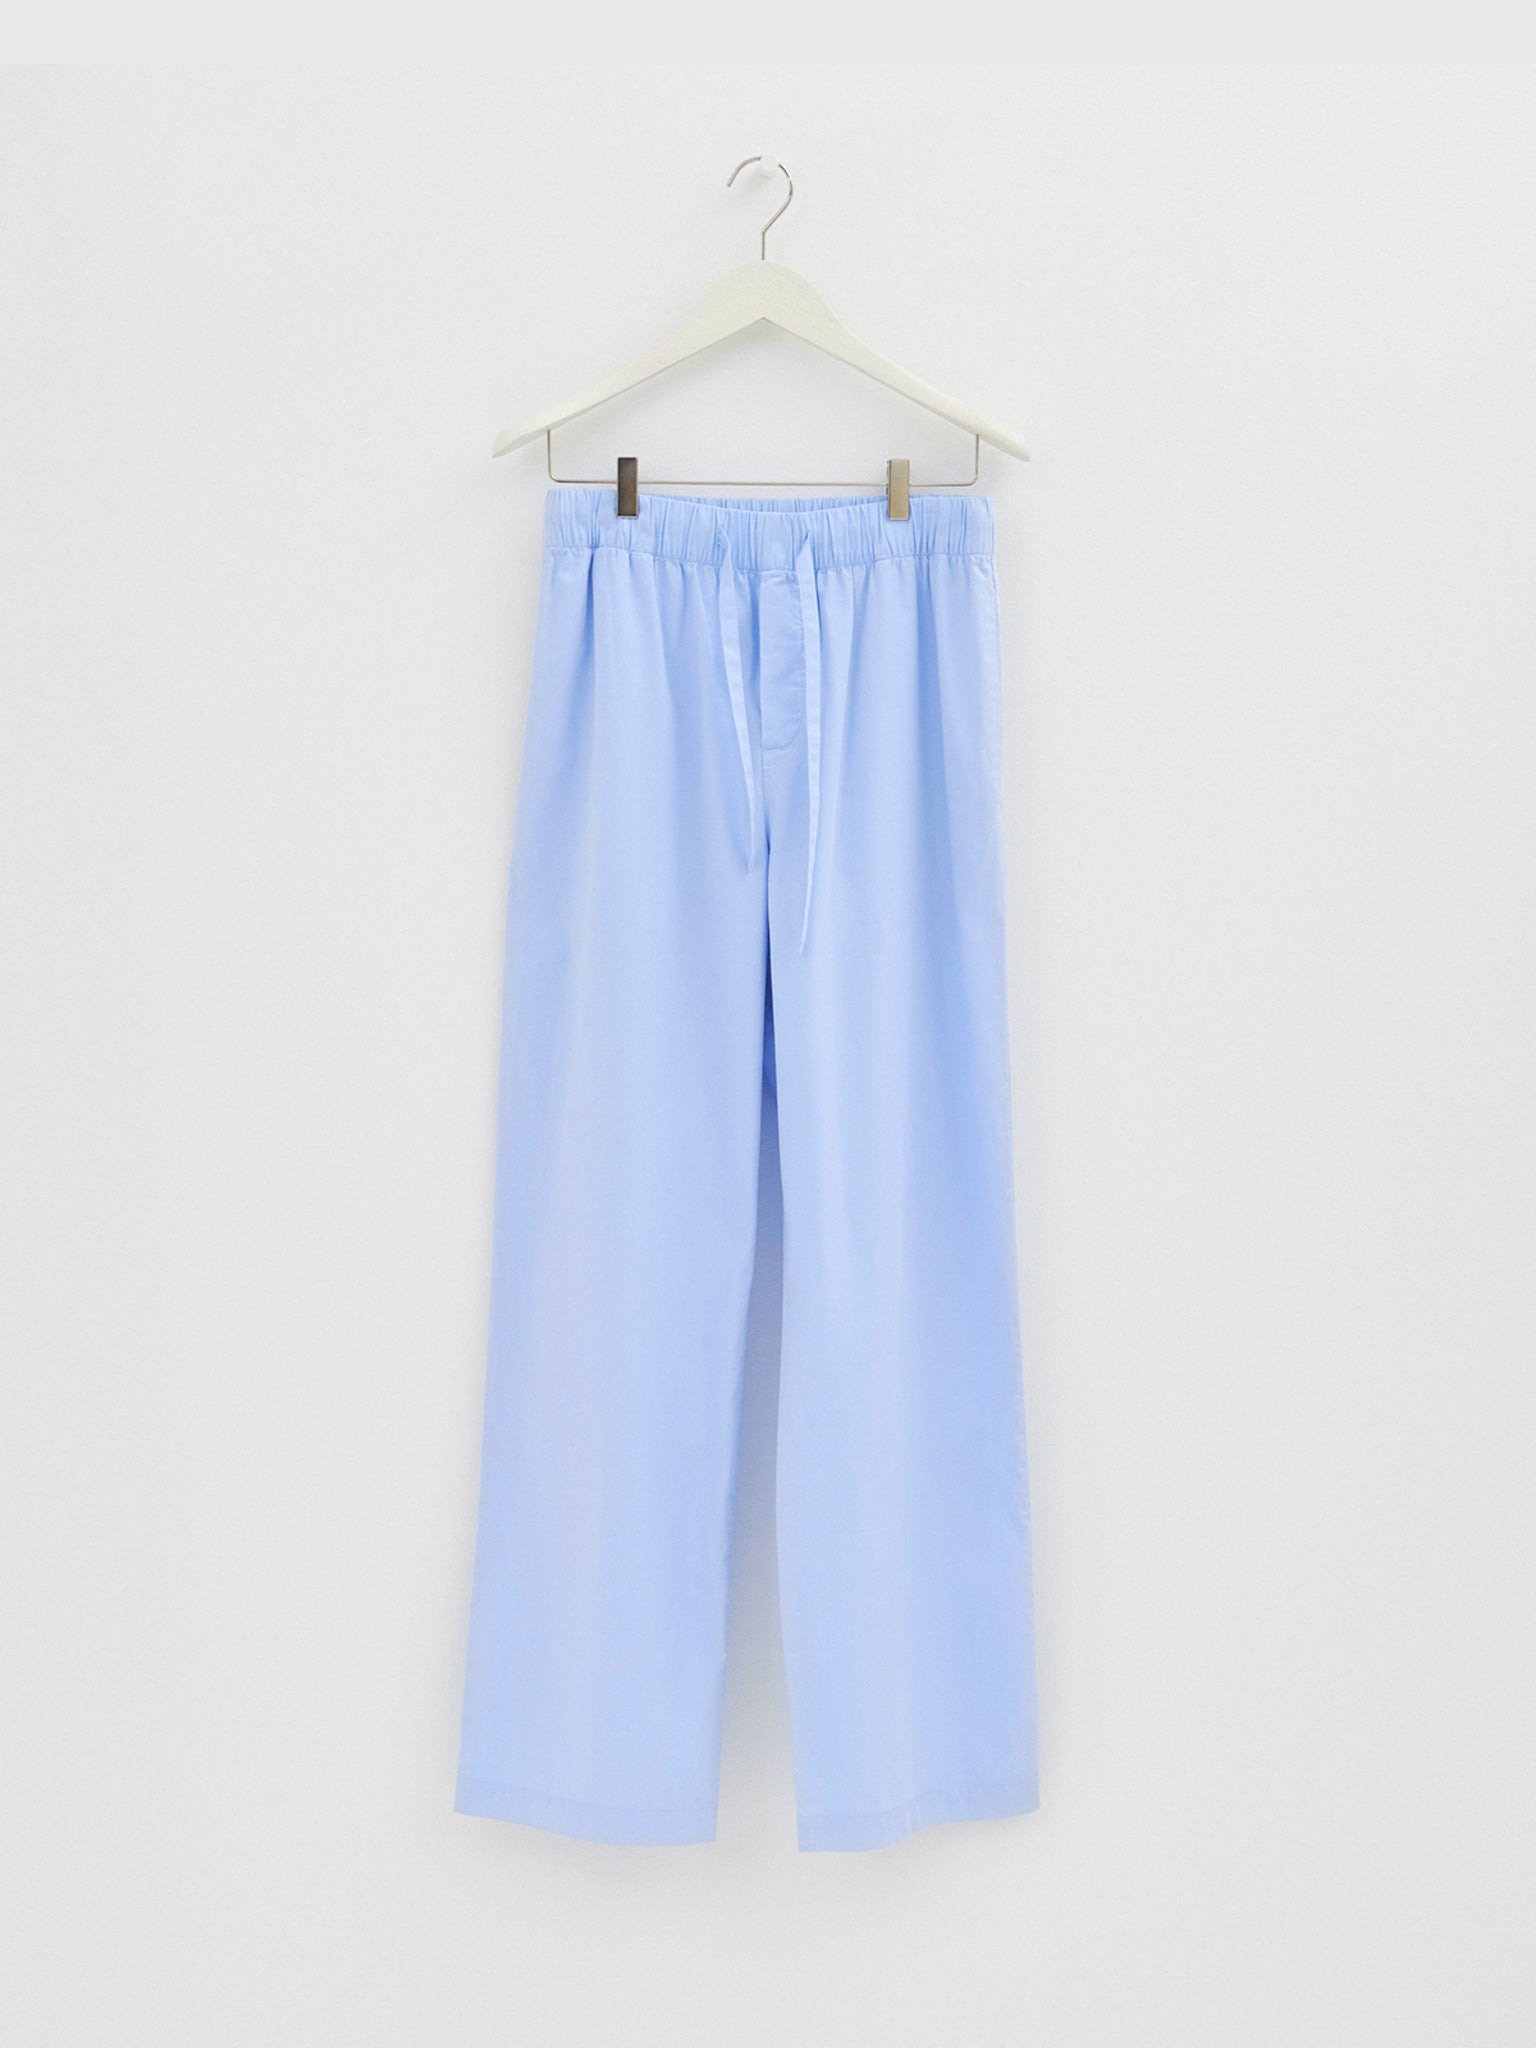 Tekla - Poplin Pyjamas Pants in Shirt Blue